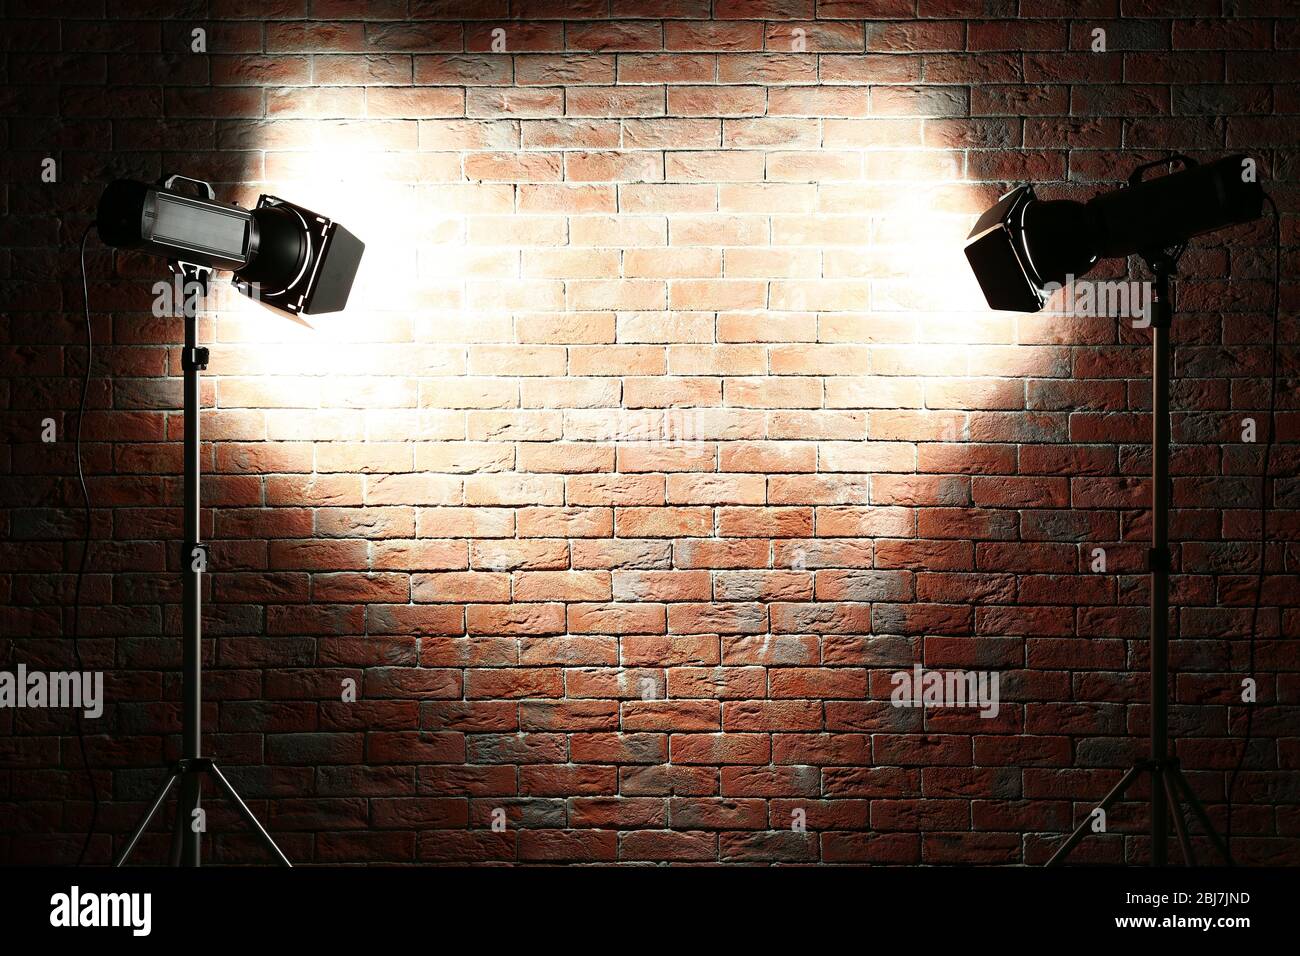 Studio light flashes on brick wall background Stock Photo - Alamy